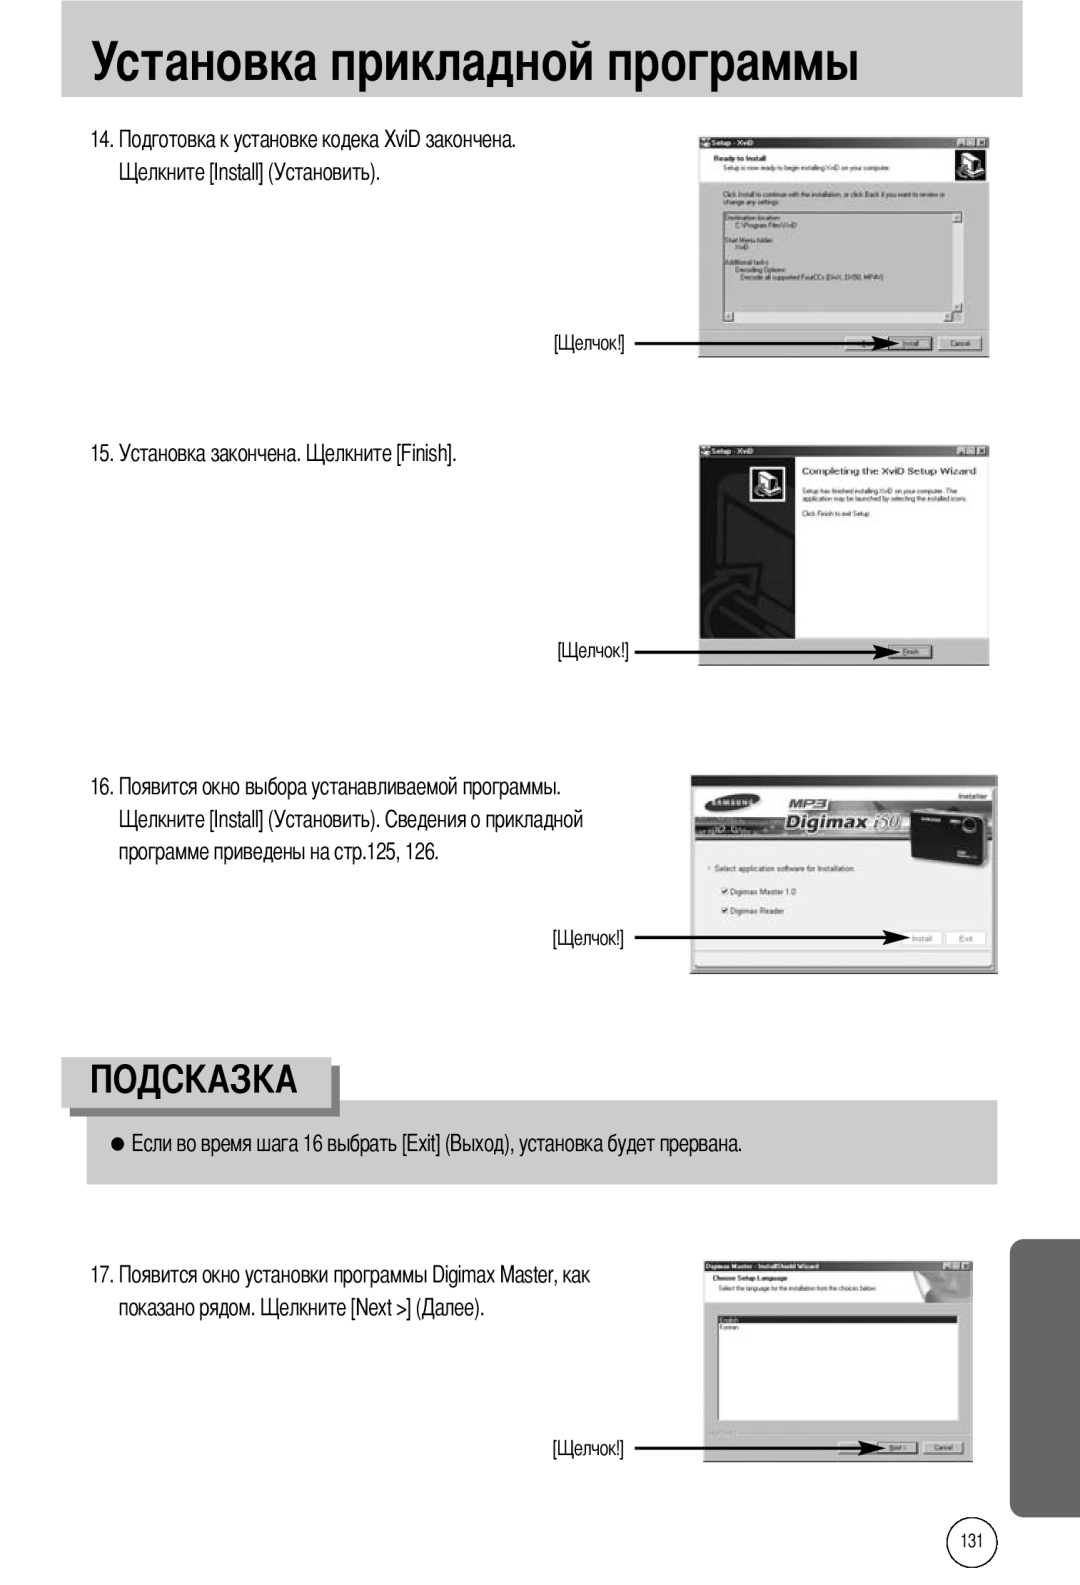 Samsung EC-I50ZZBBB/DE, EC-I50ZZBBA/FR manual 15. Установка закончена, программе приведены на стр.125, показано рядом 